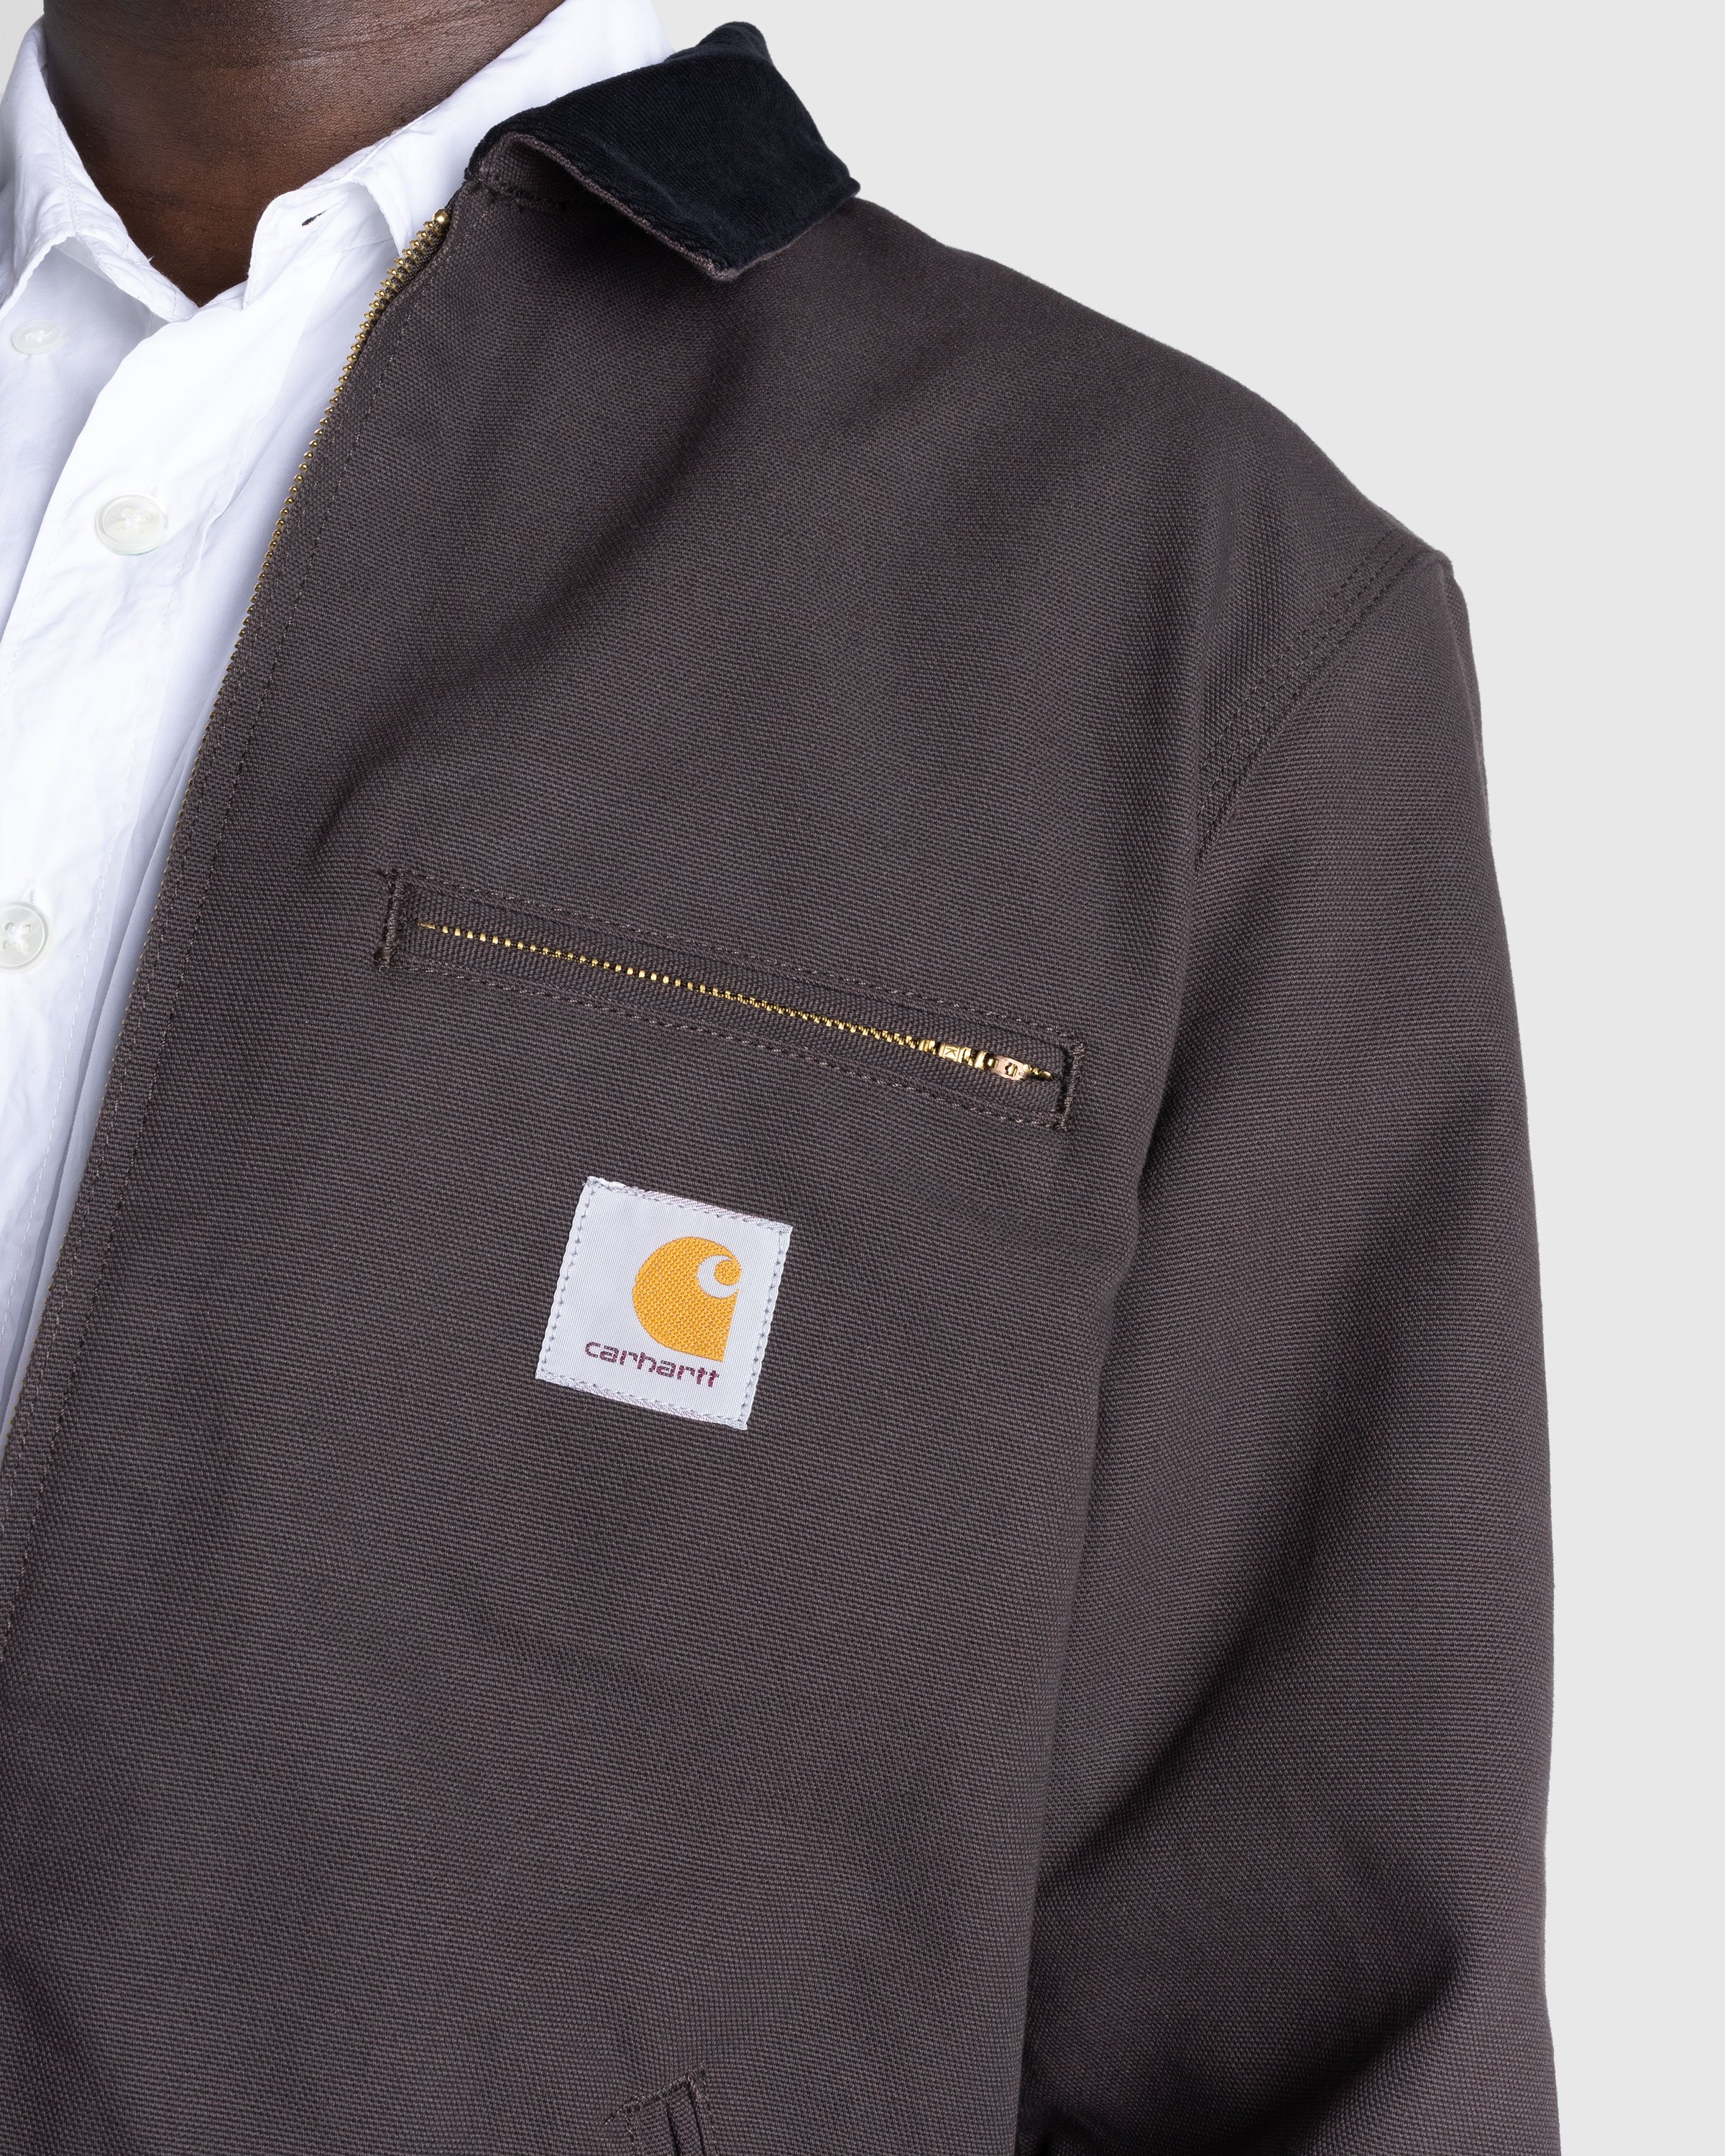 Carhartt WIP - Detroit Jacket Tobacco / Black /rigid - Clothing - Brown - Image 5